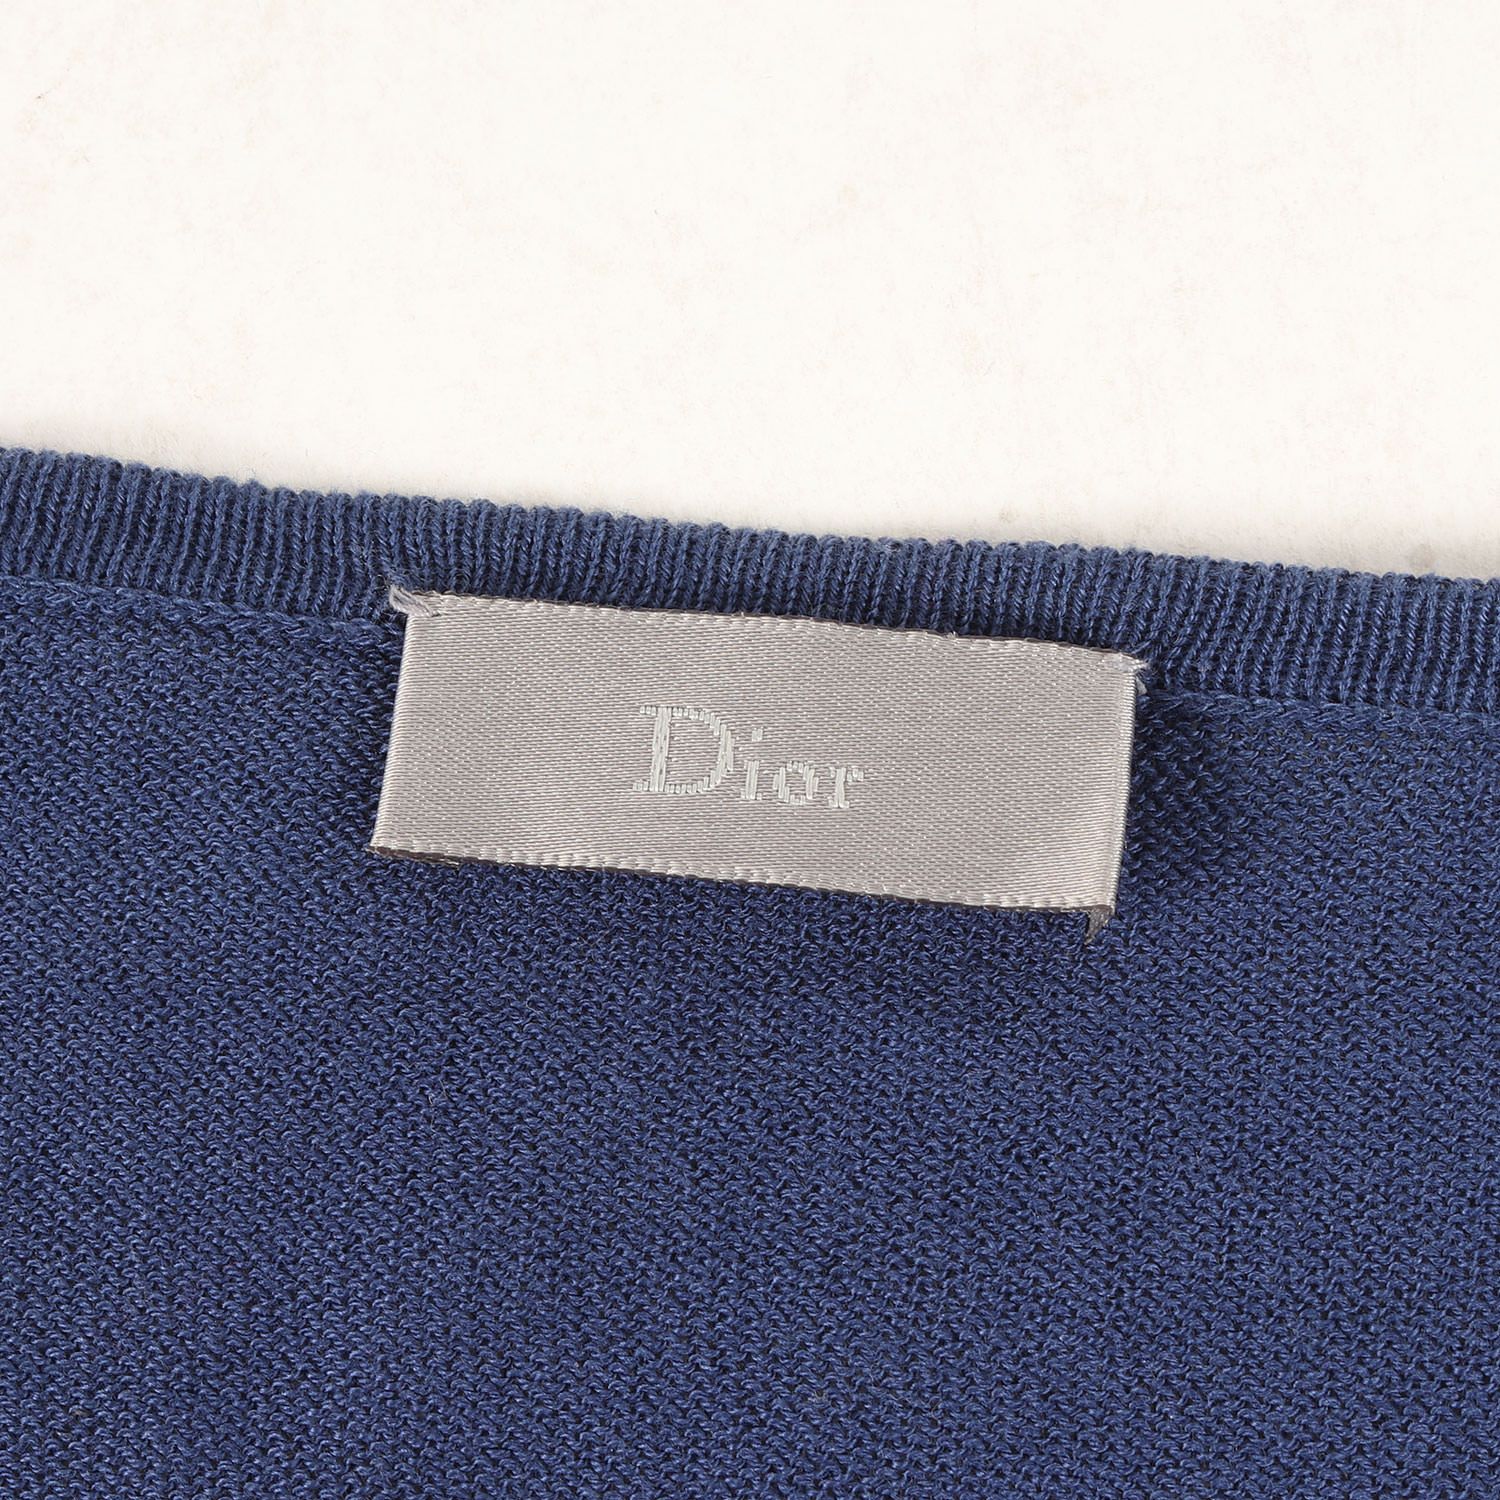 Dior HOMME ディオールオム ニット サイズ:XS Vネック ハイゲージ コットン ニット セーター 163M625AT500 トップス  プルオーバー スリット 長袖 ネイビー 紺 イタリア製 ブランド シンプル 無地